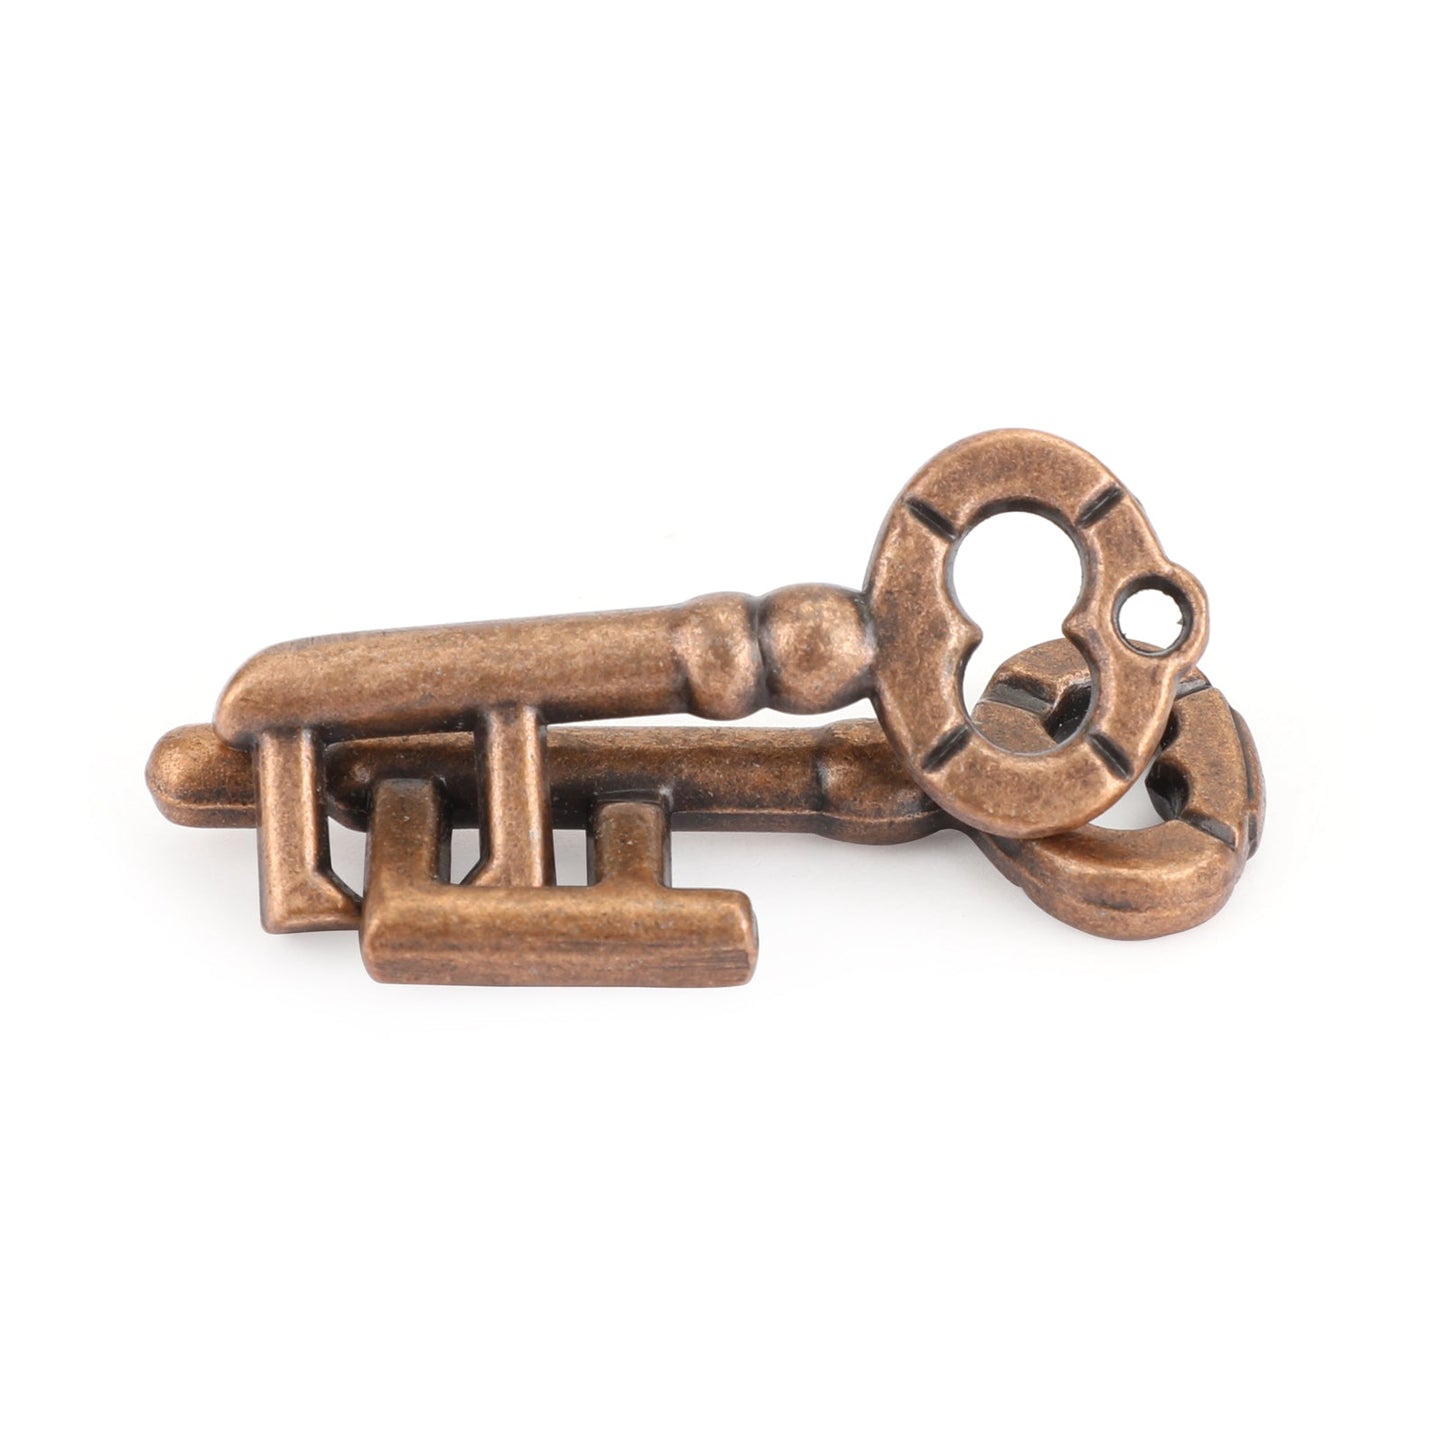 Vintage -Legierung Guss IQ Mind Puzzle Box Brain Teaser Game Key Lock Metal Lock Toys